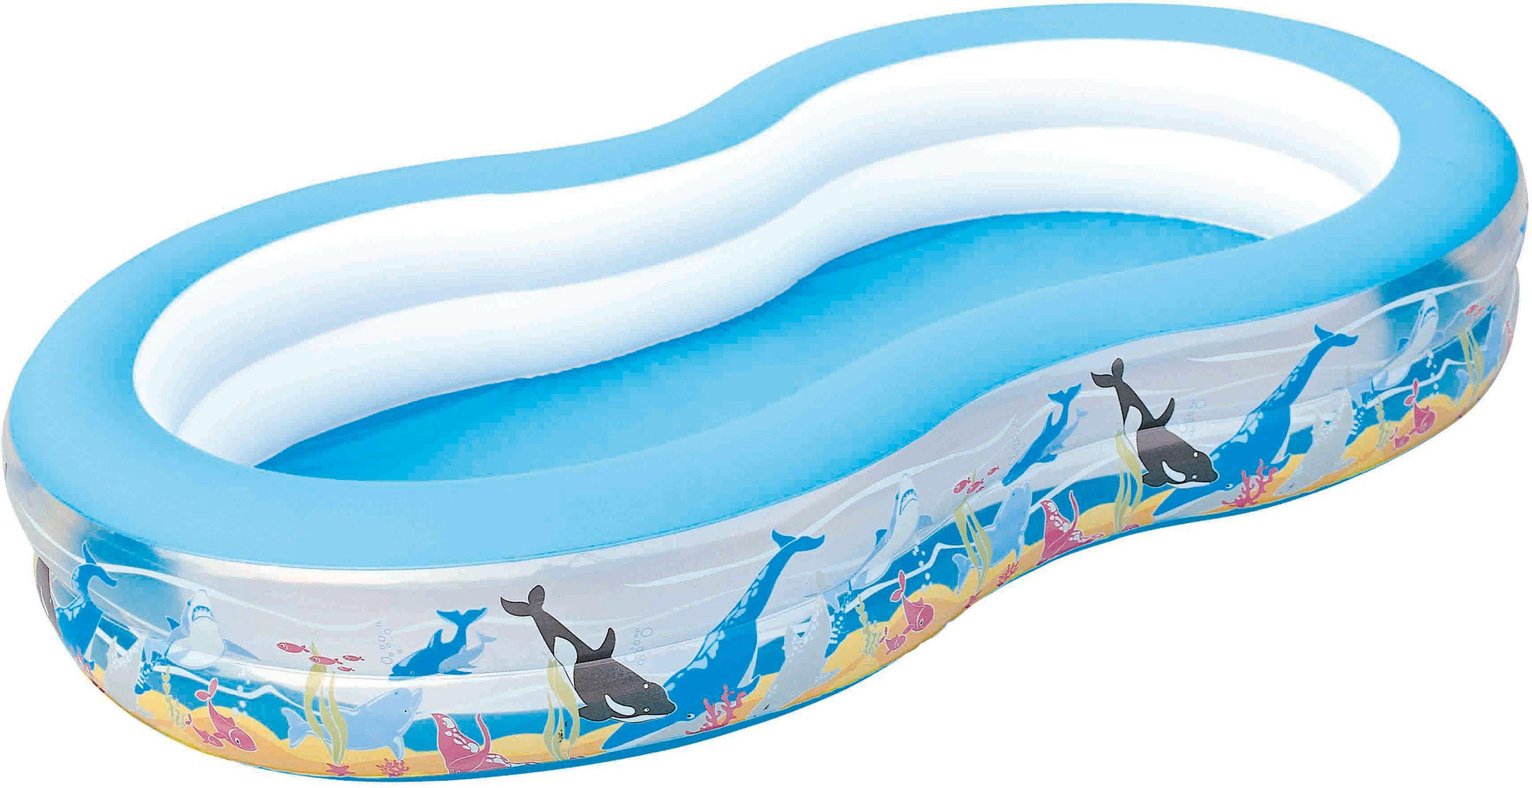 Chad Valley 9ft Ocean Lagoon Kids Paddling Pool Review